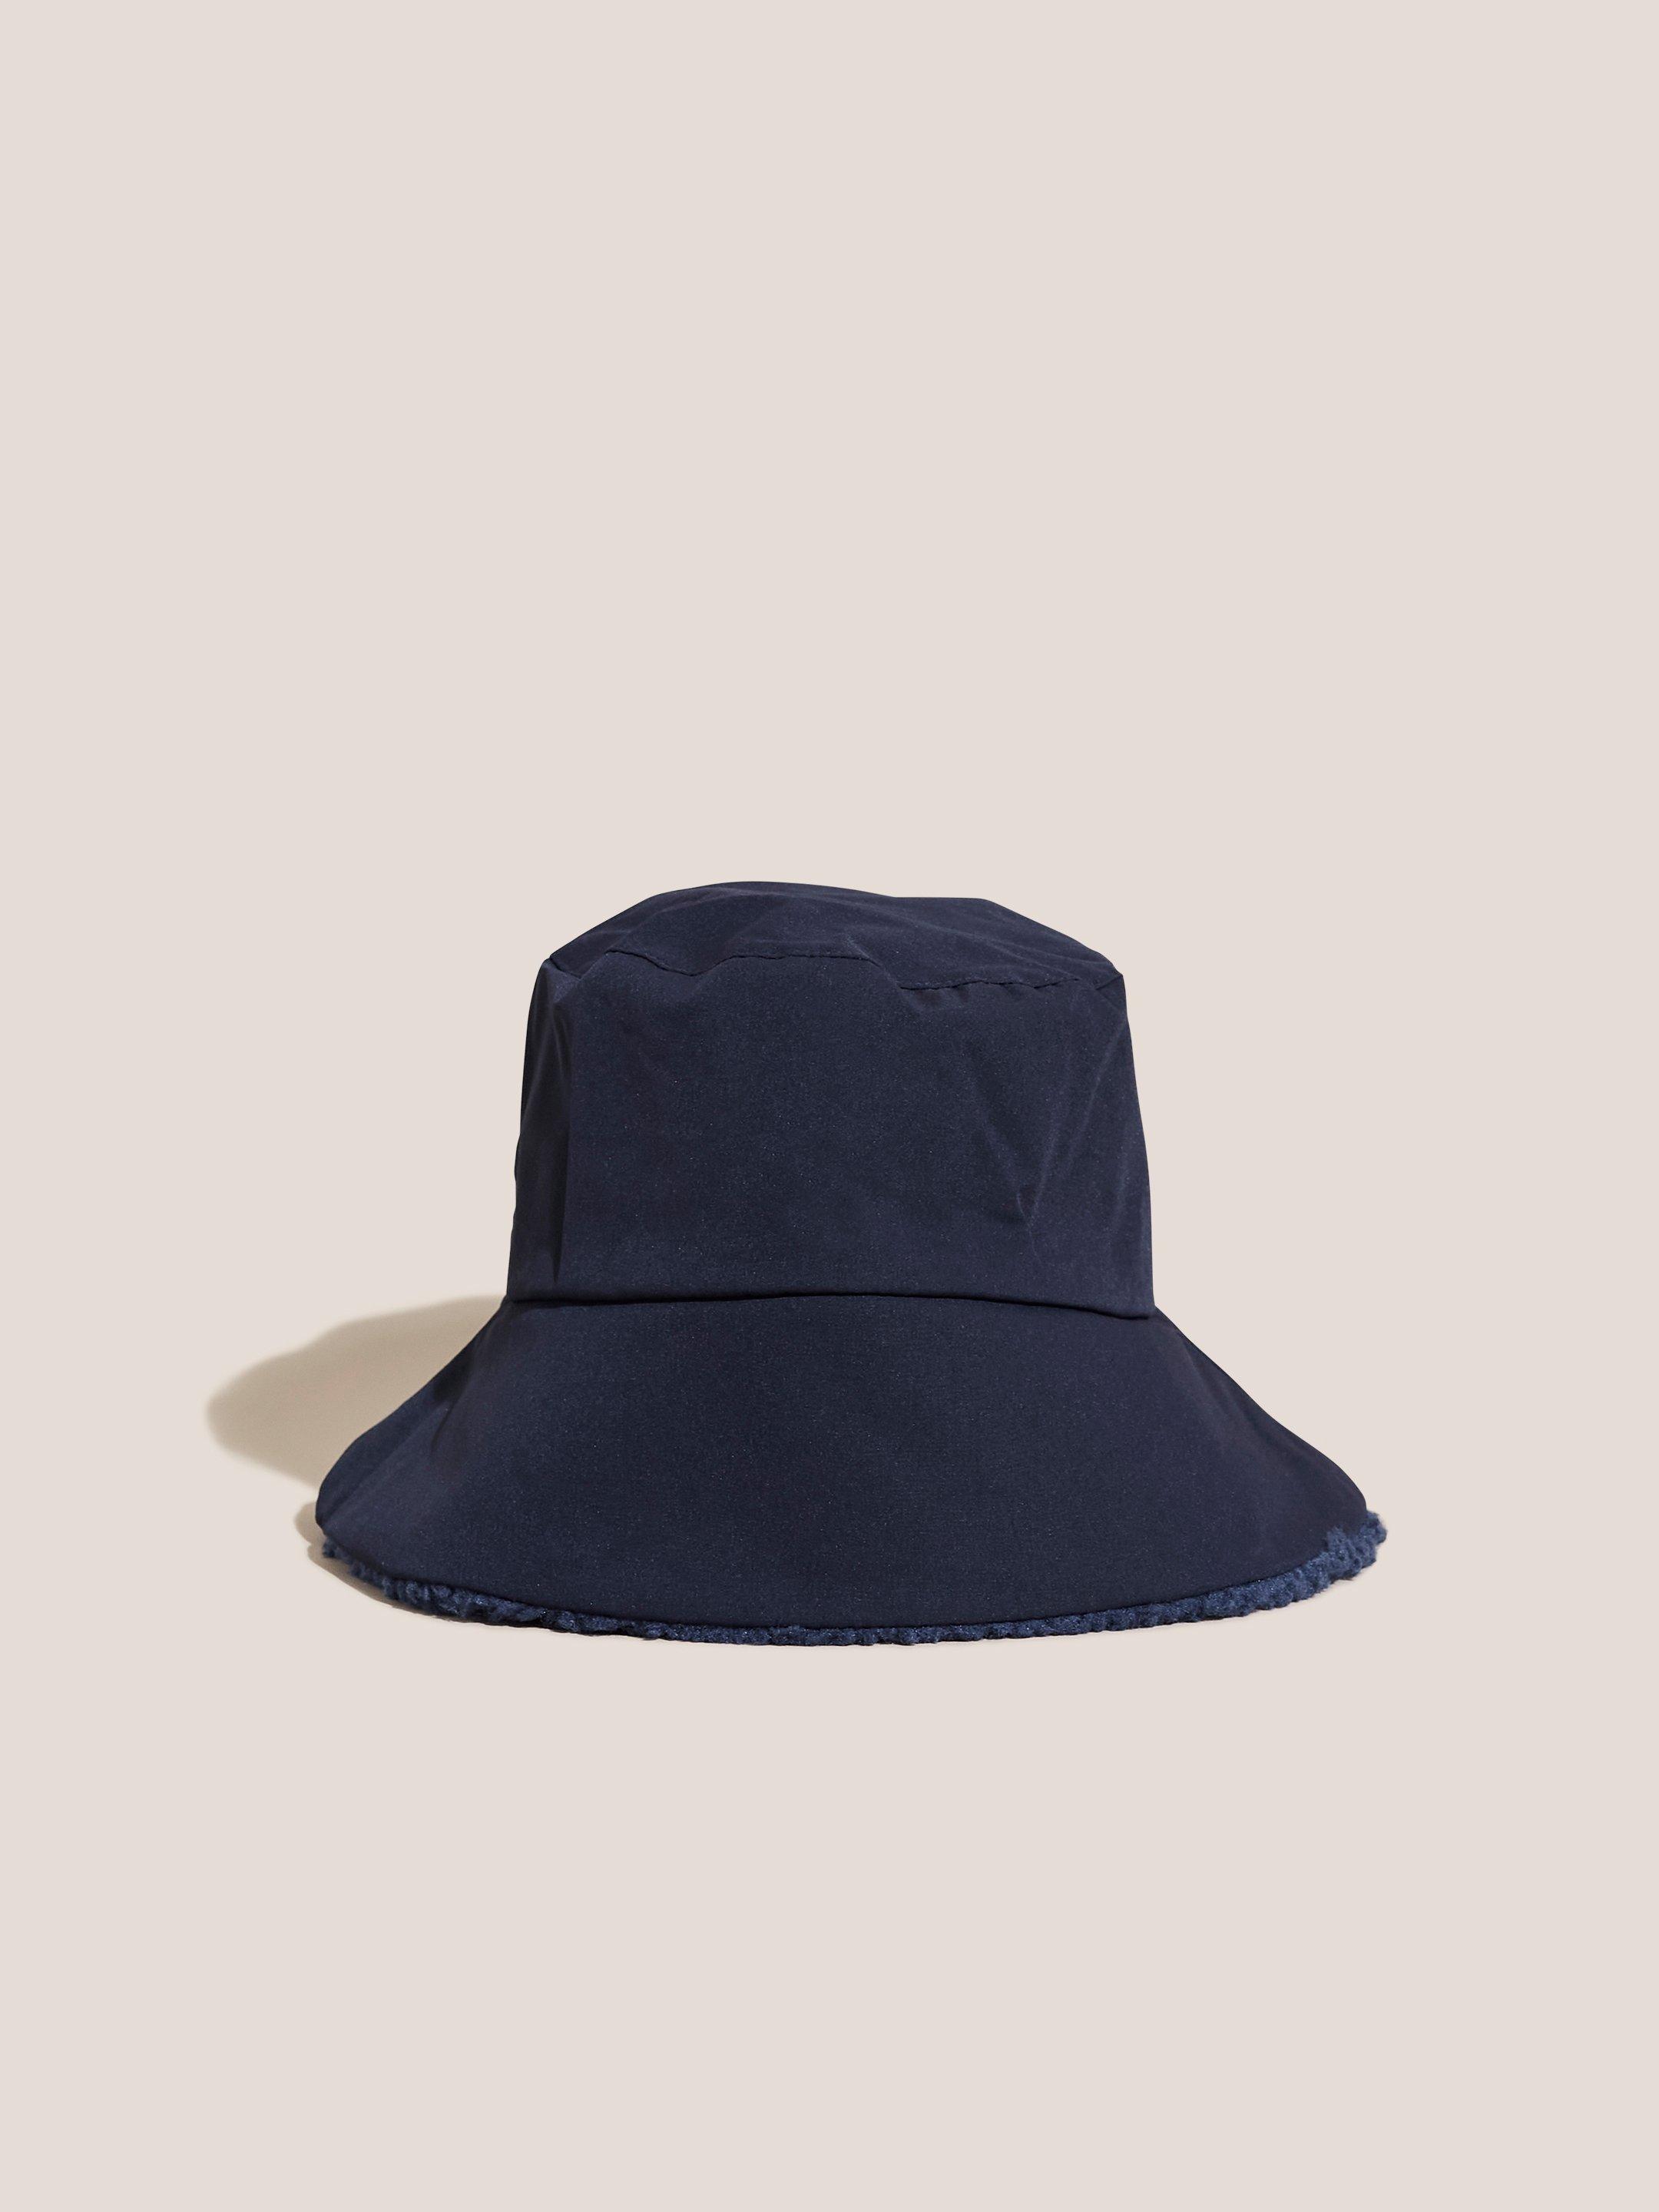 Borg Reversible Bucket Hat in DARK NAVY - LIFESTYLE